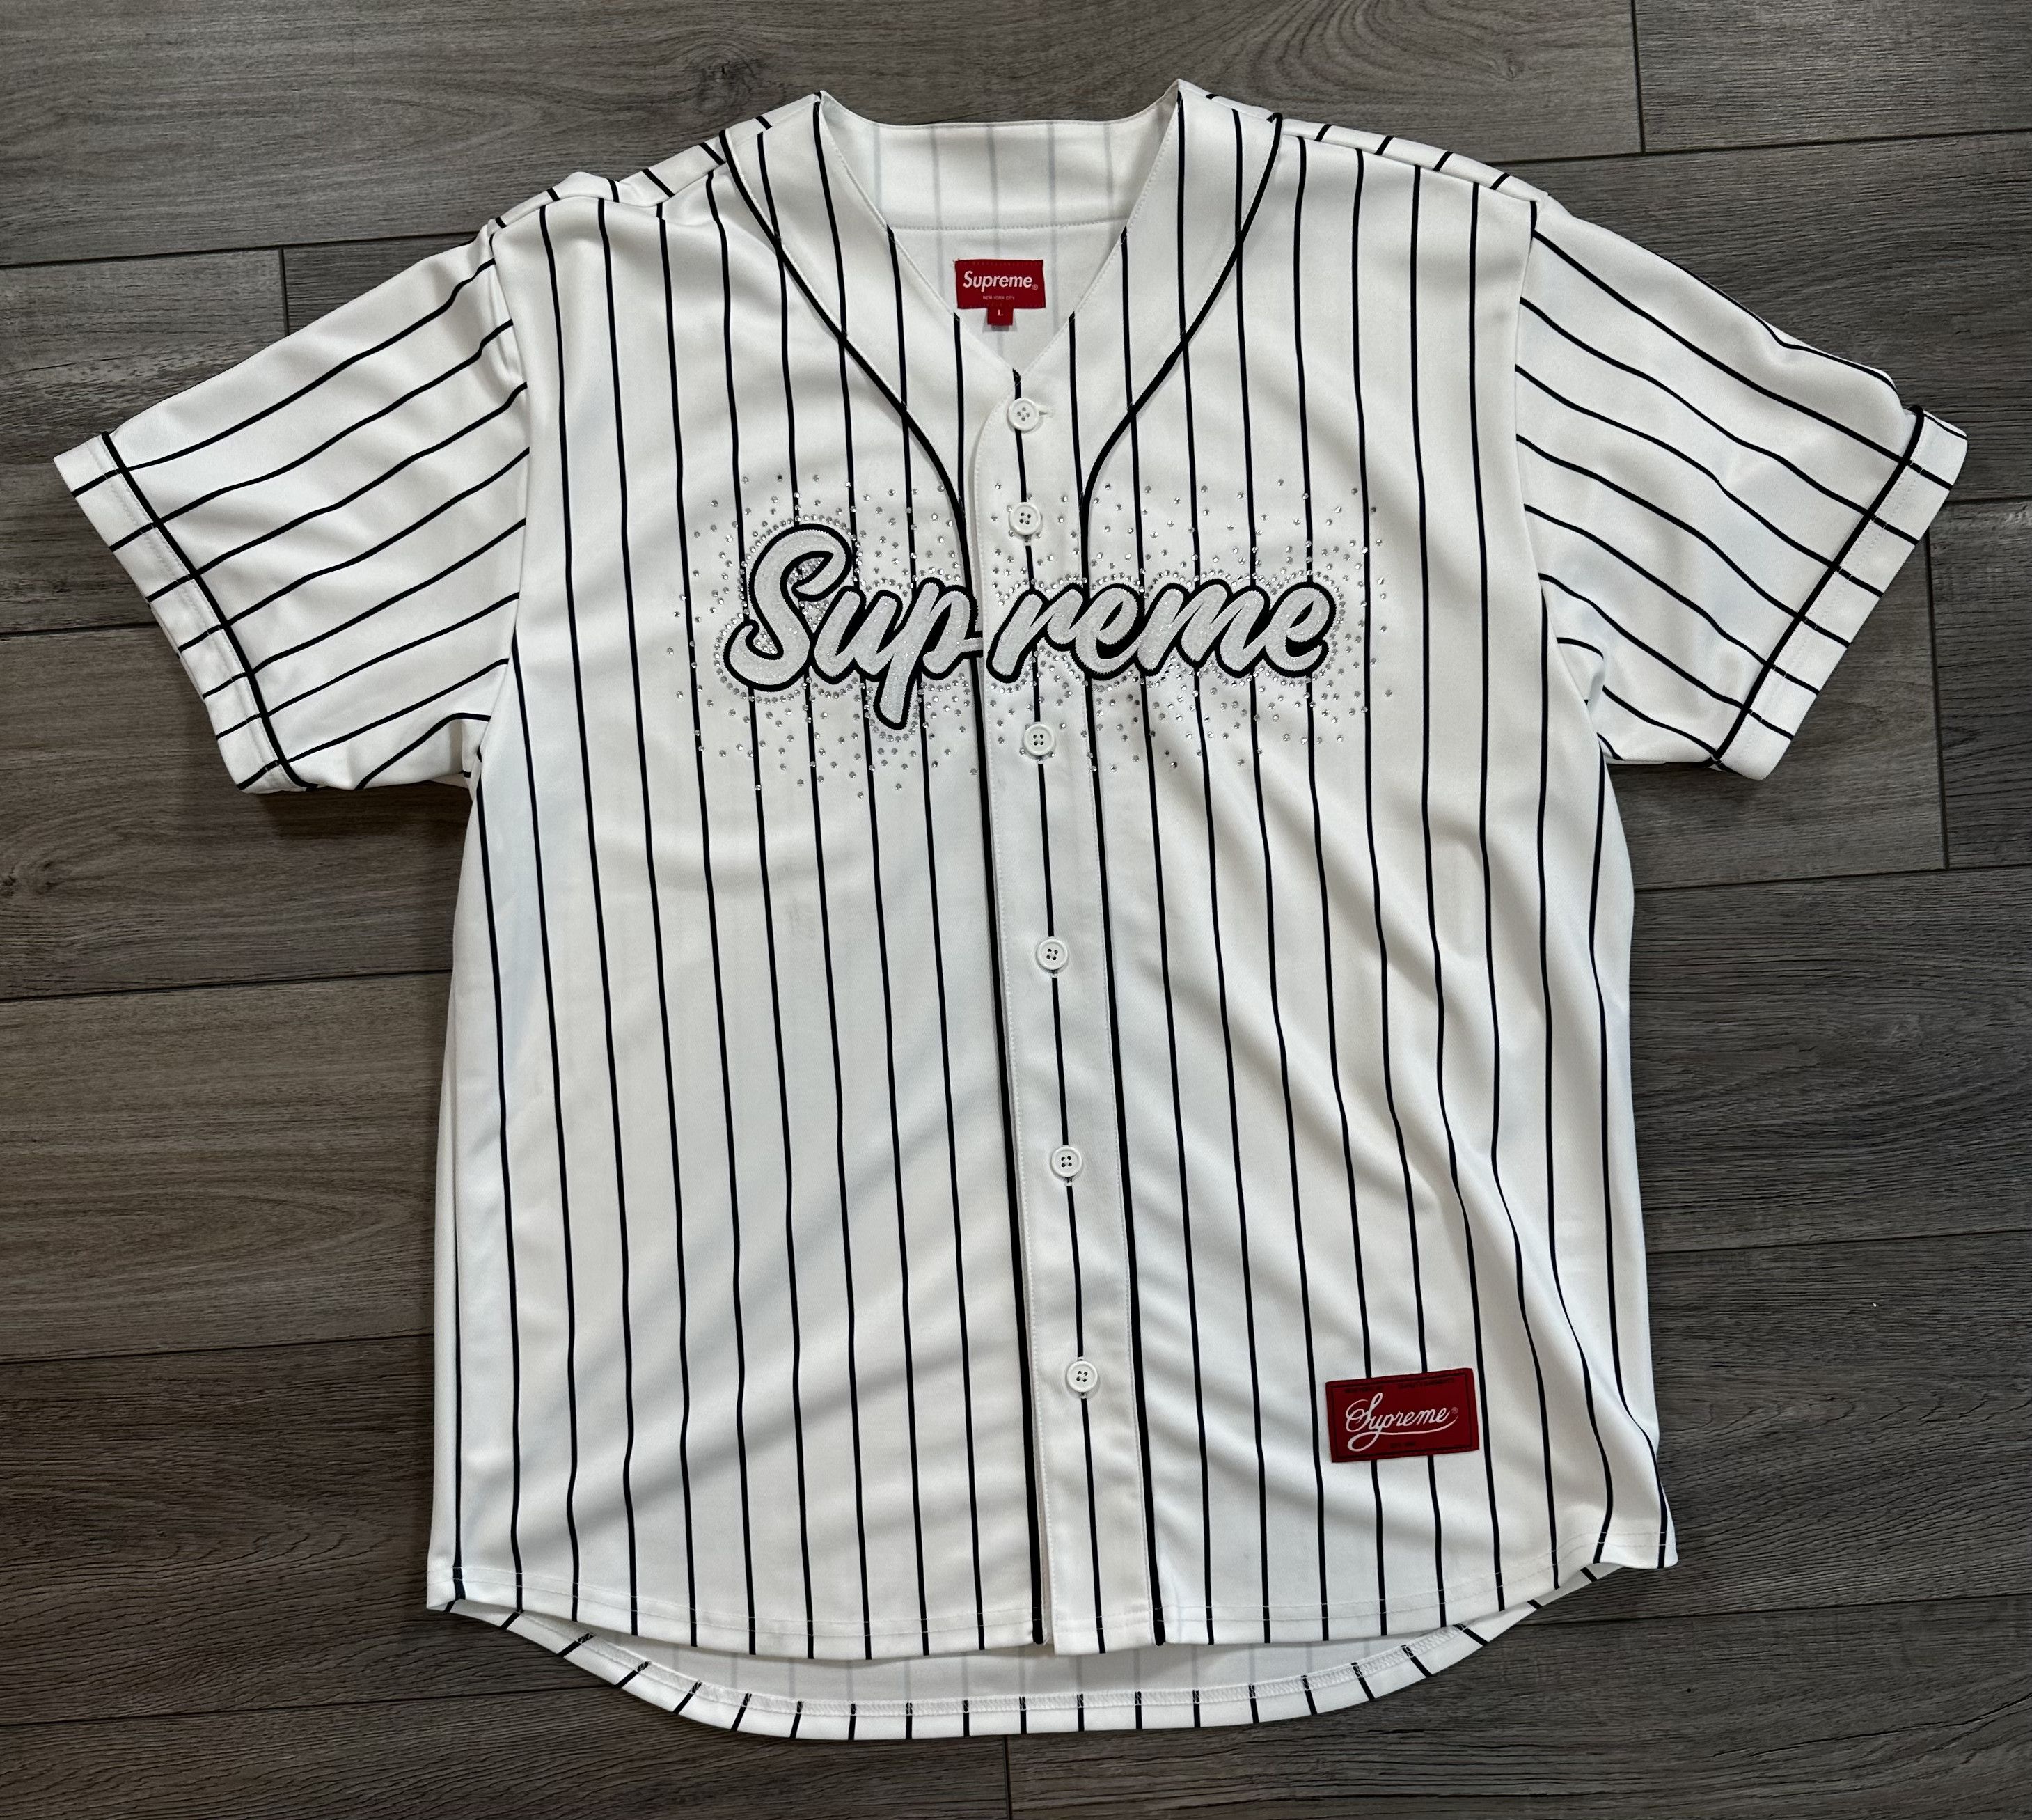 Supreme Supreme - Rhinestone Baseball Jersey | Grailed